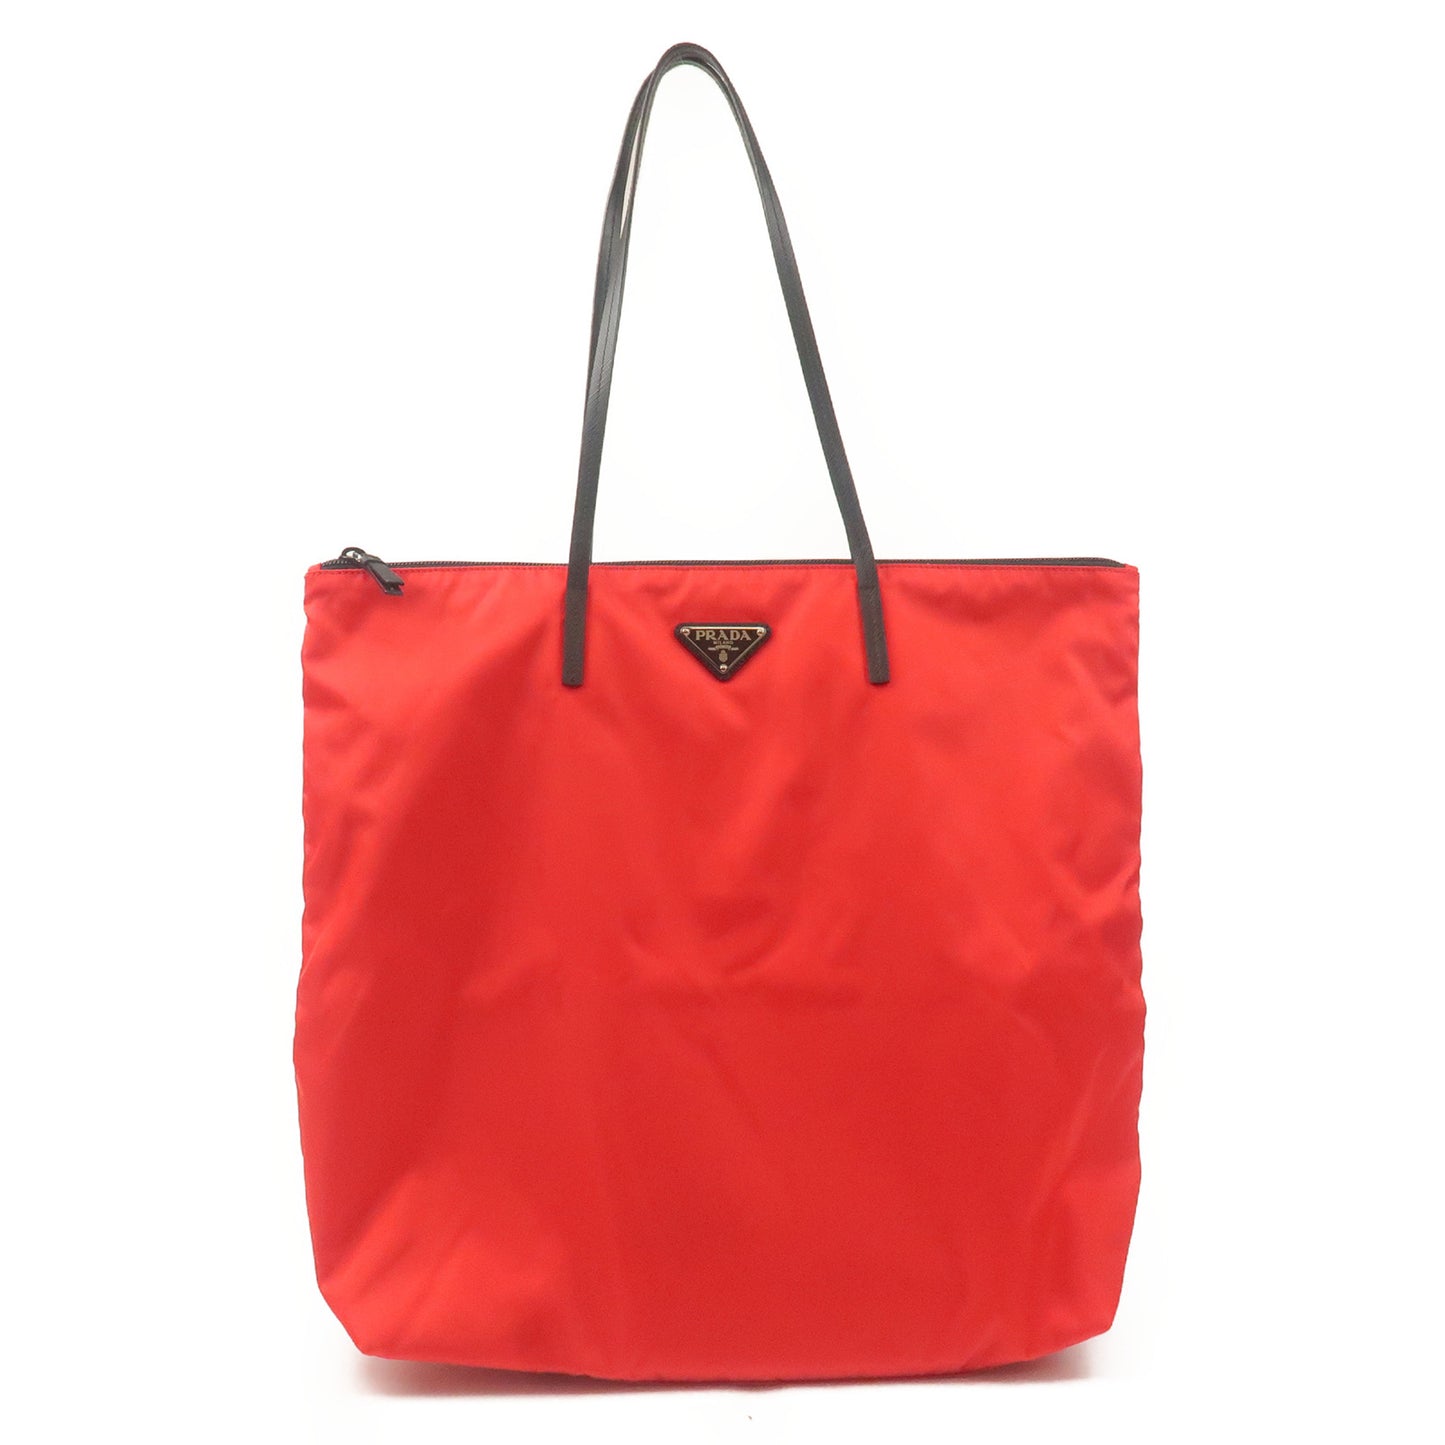 PRADA-Nylon-Leather-Tote-Bag-Red-NERO-Black-1BY300